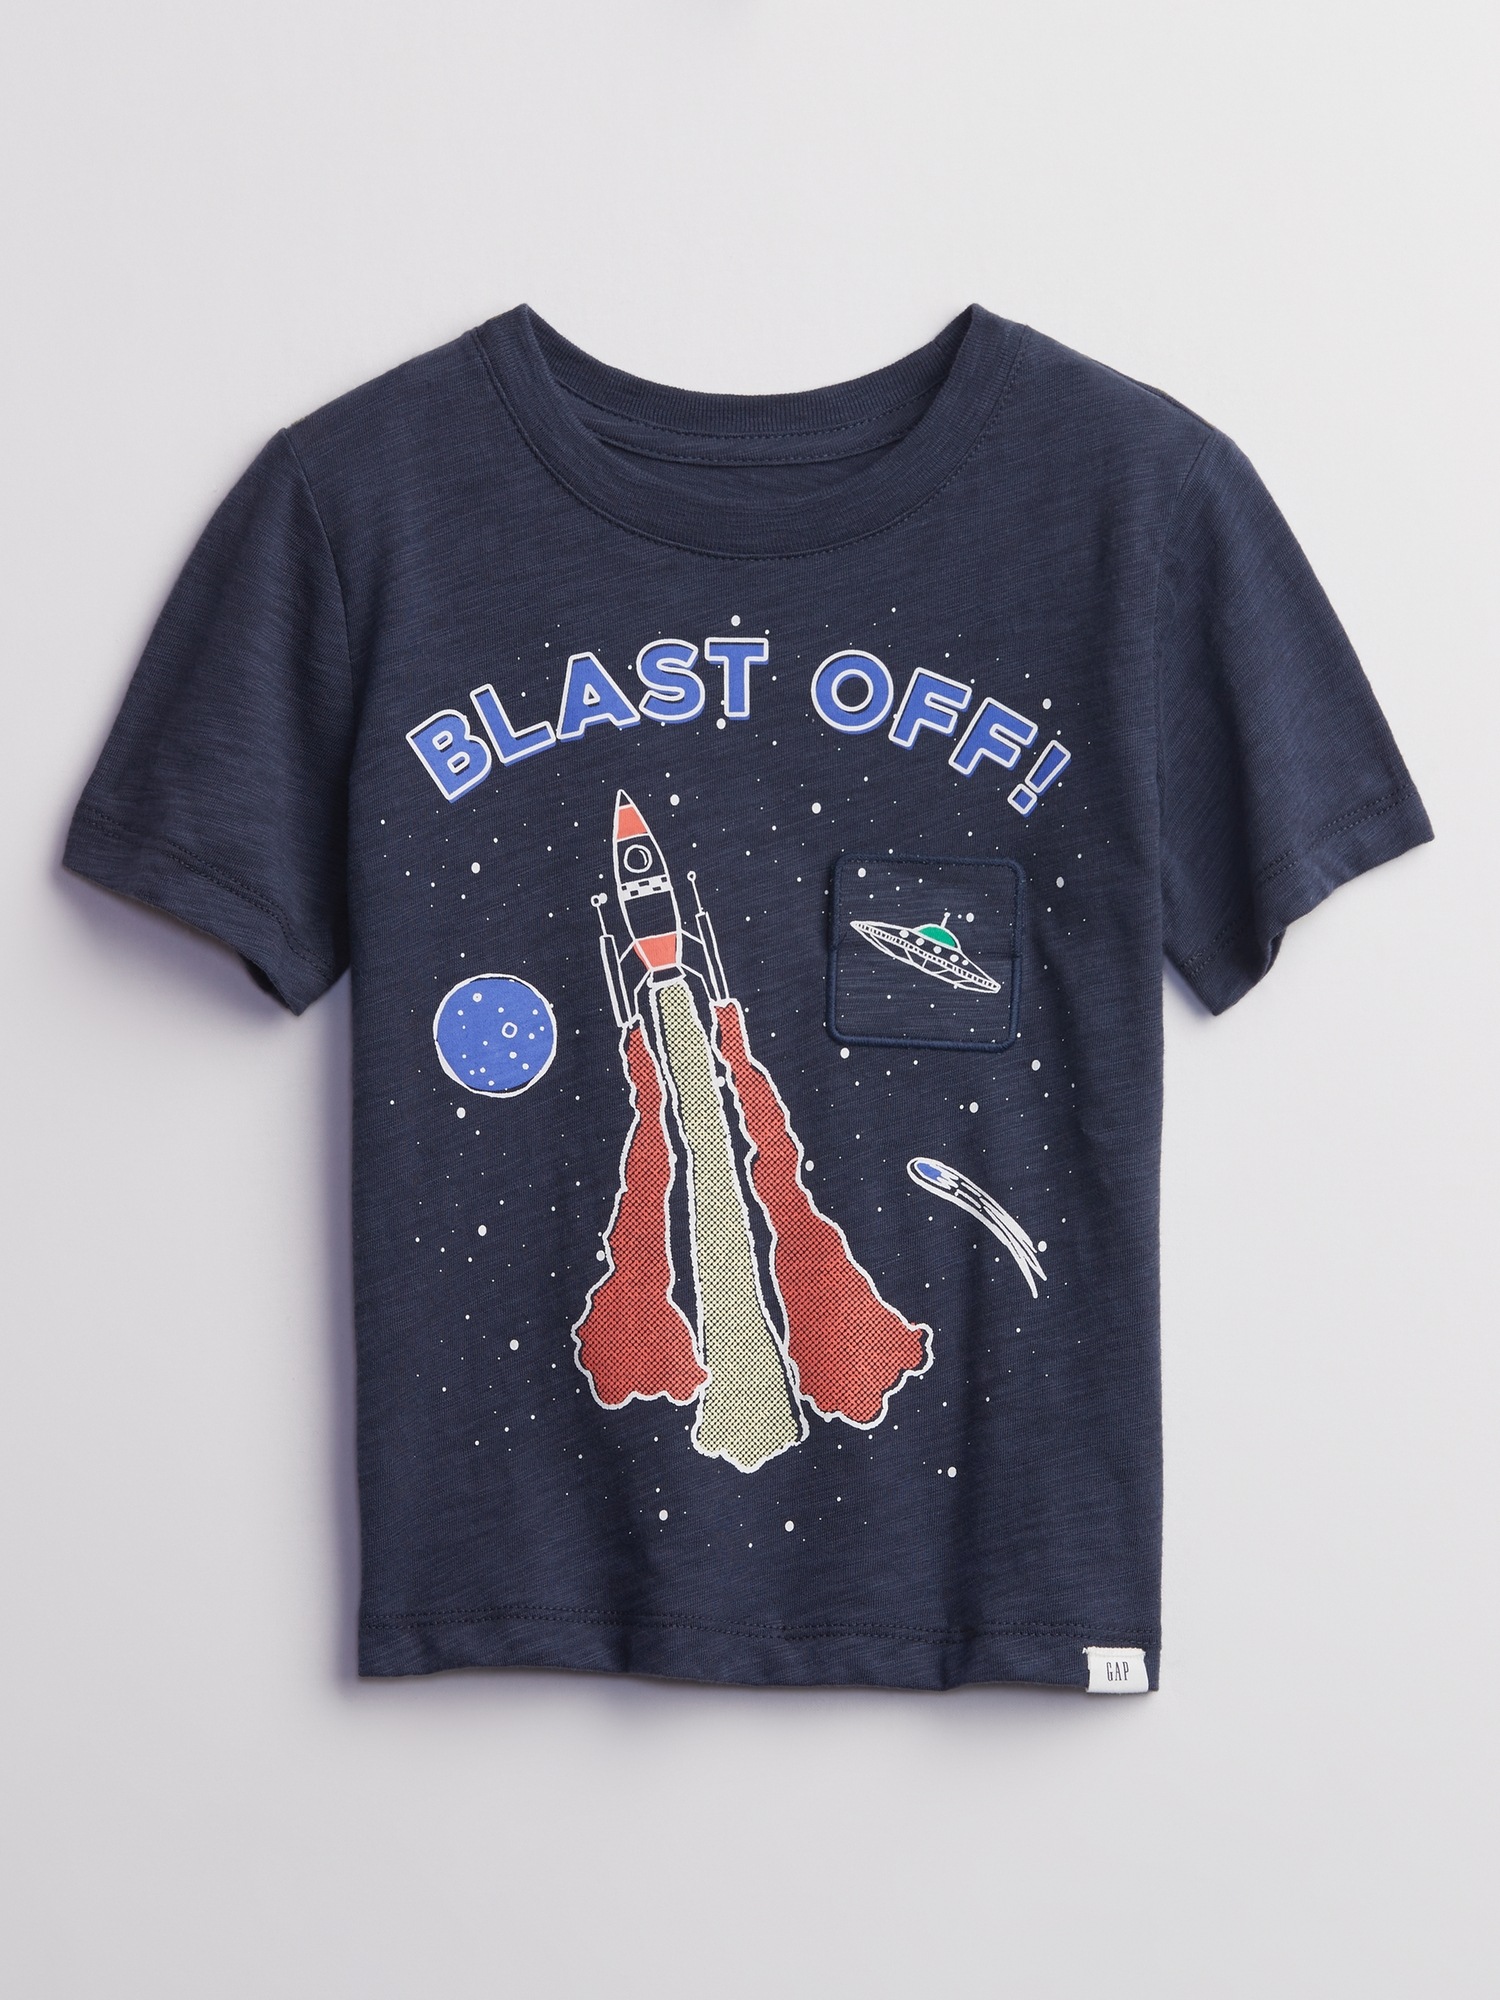 Toddler Graphic T-Shirt | Gap Factory